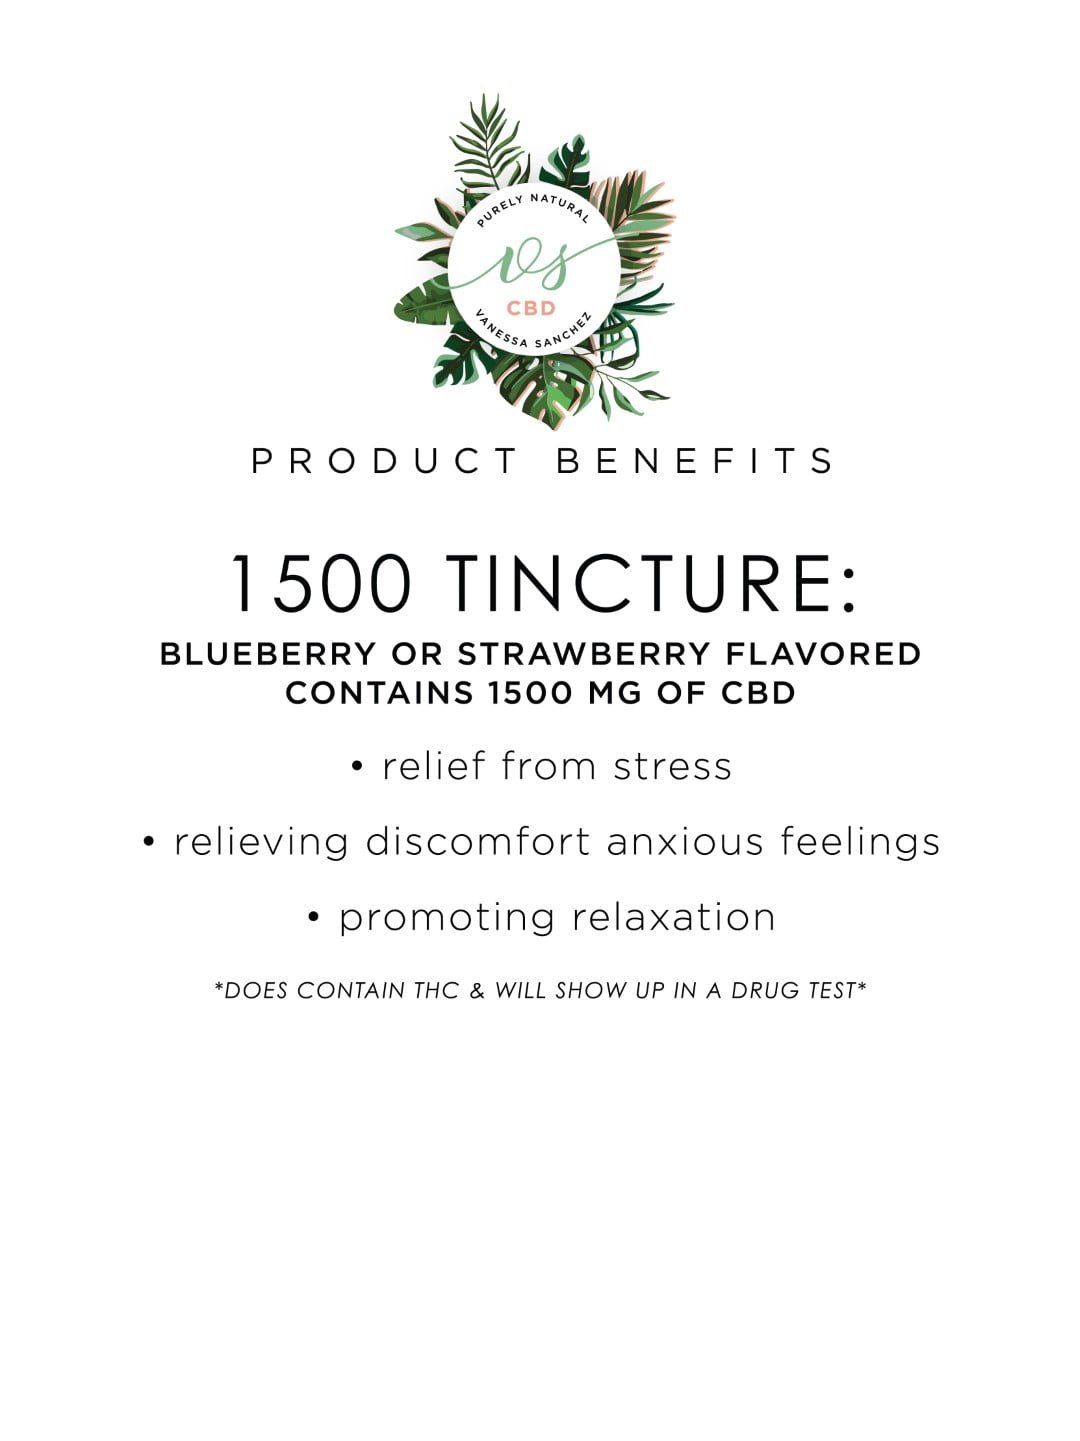 1500 tincture benefits-01 (Large)